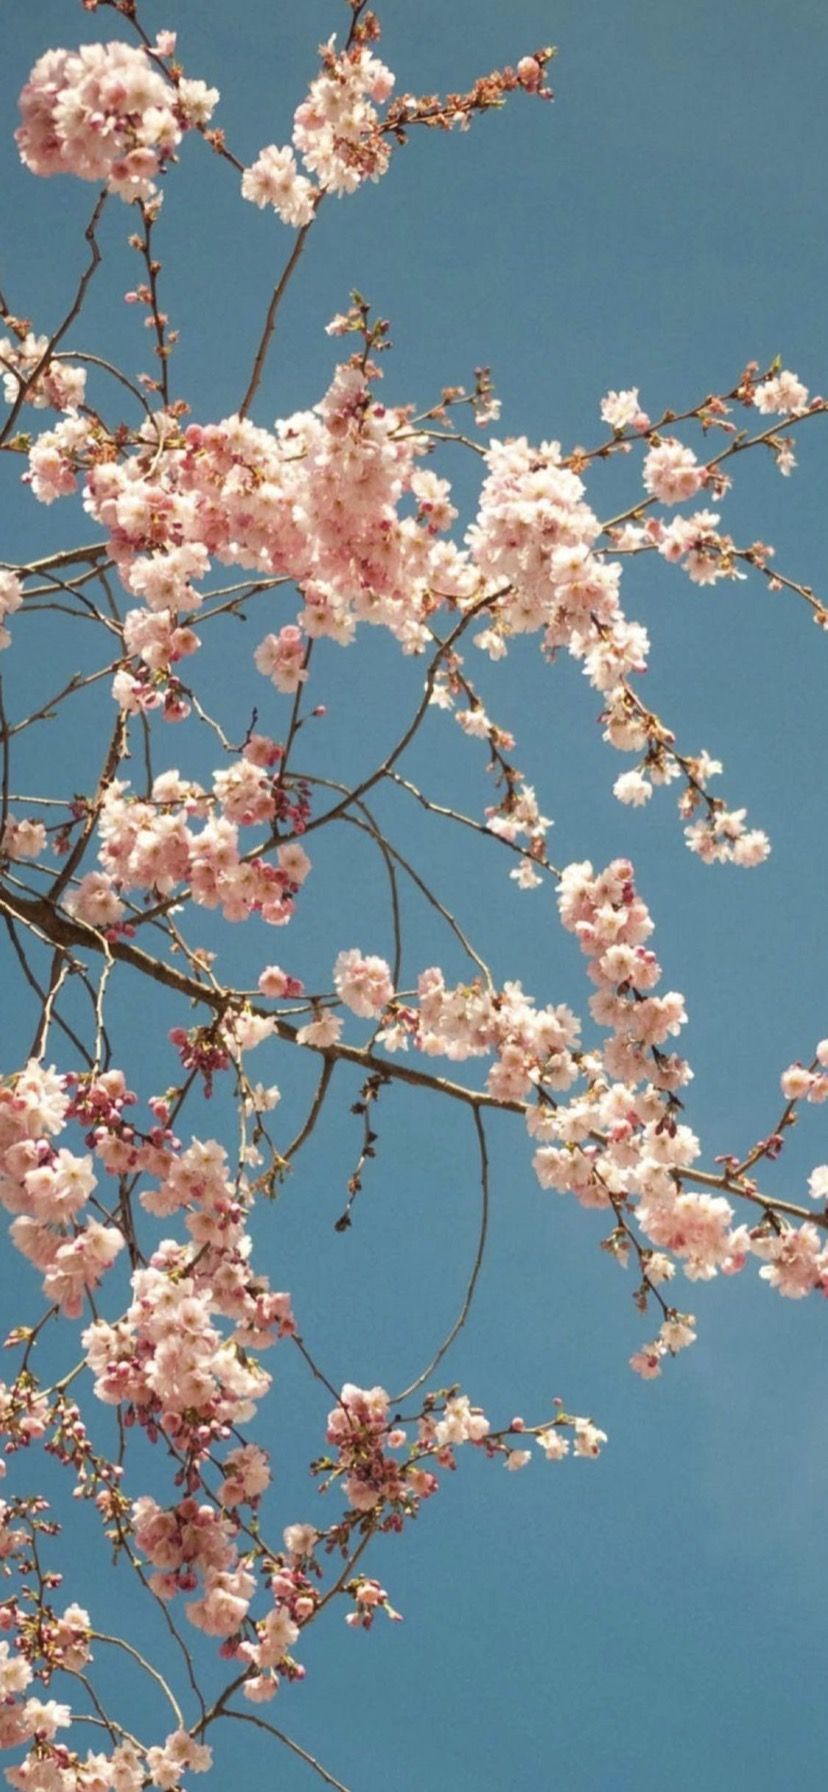 Cherry blossoms against a blue sky - Cherry